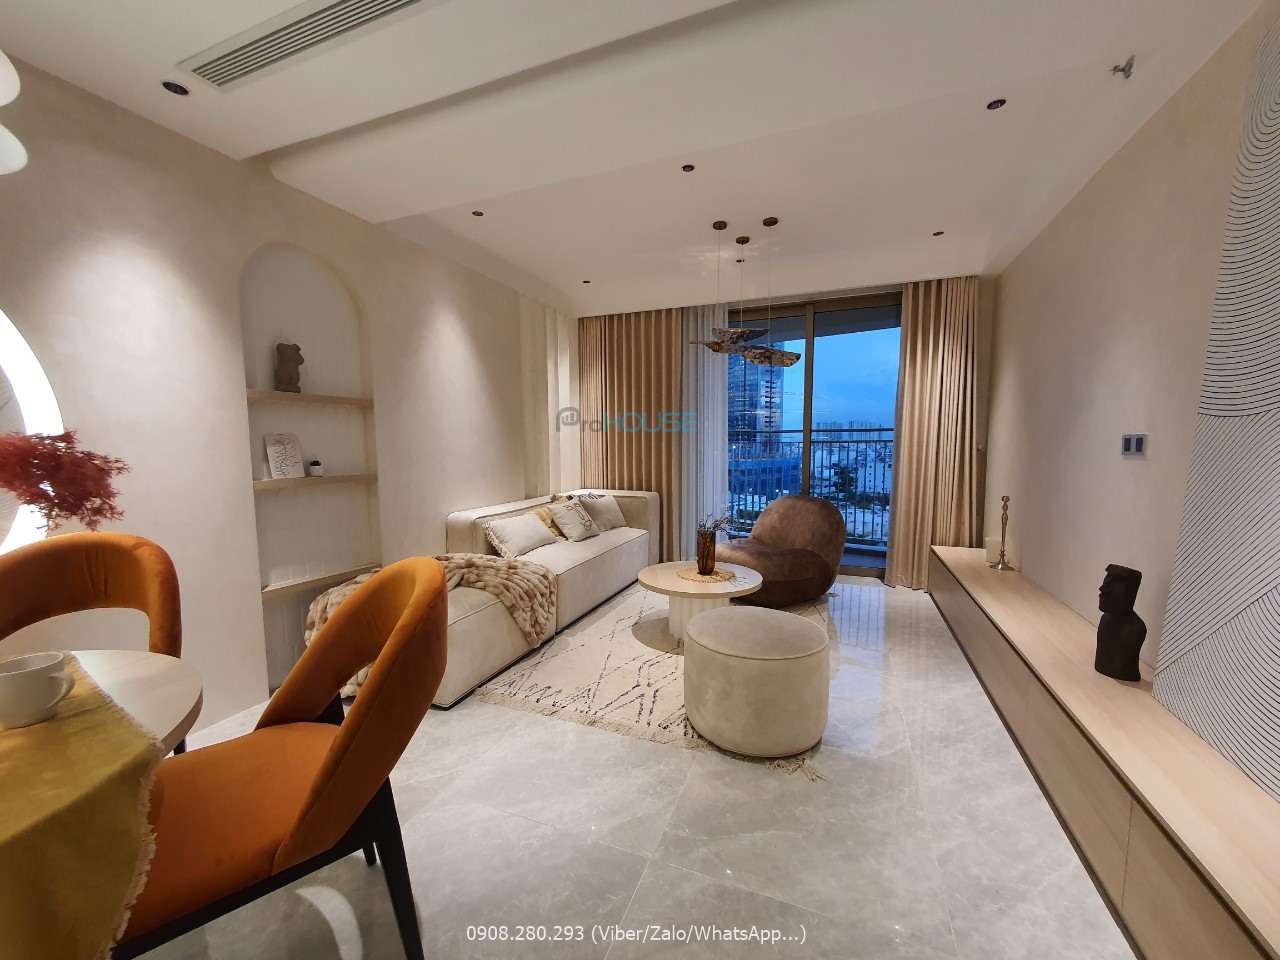 Midtown M8 - The Peak 公寓采用浅色调设计、侘寂风格、高档家具和河景